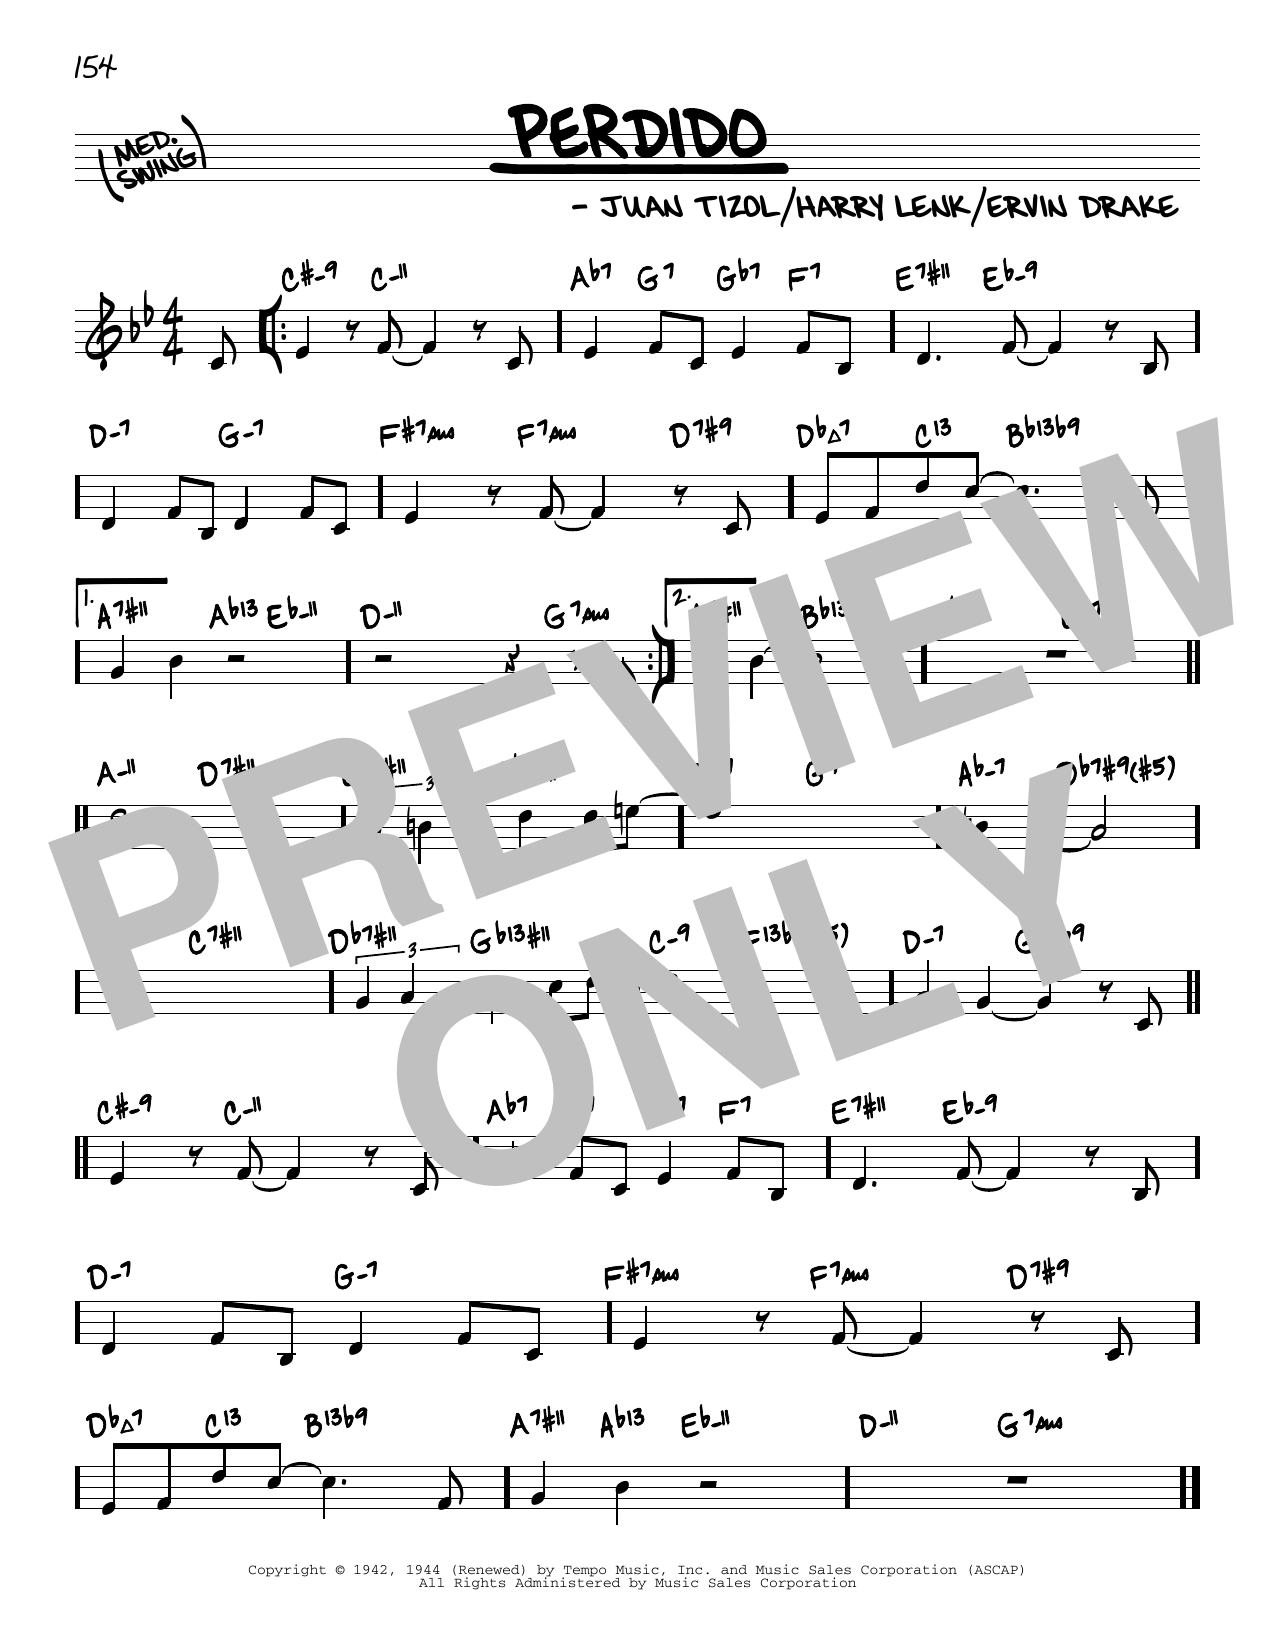 Duke Ellington Perdido (arr. David Hazeltine) Sheet Music Notes & Chords for Real Book – Enhanced Chords - Download or Print PDF